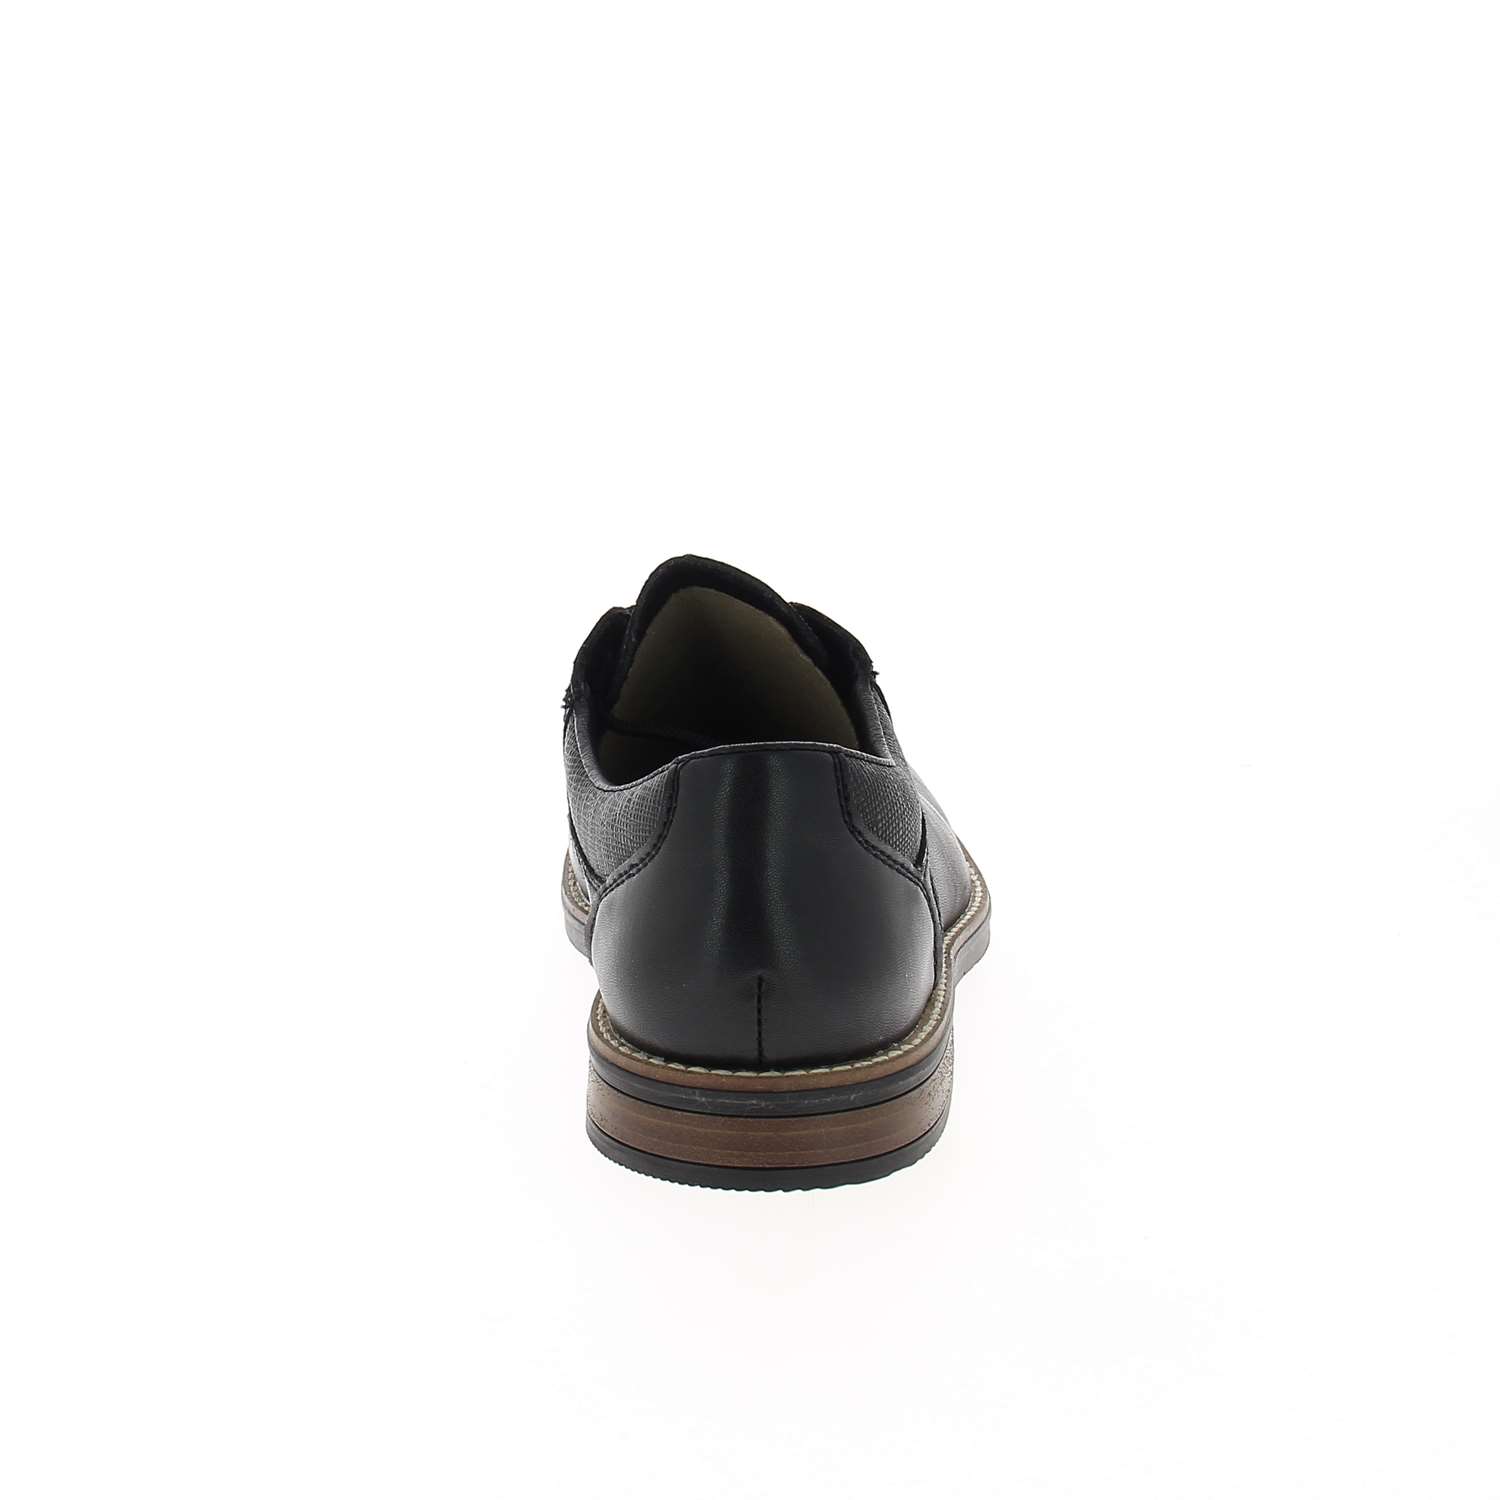 04 - RISAB - RIEKER - Chaussures à lacets - Cuir